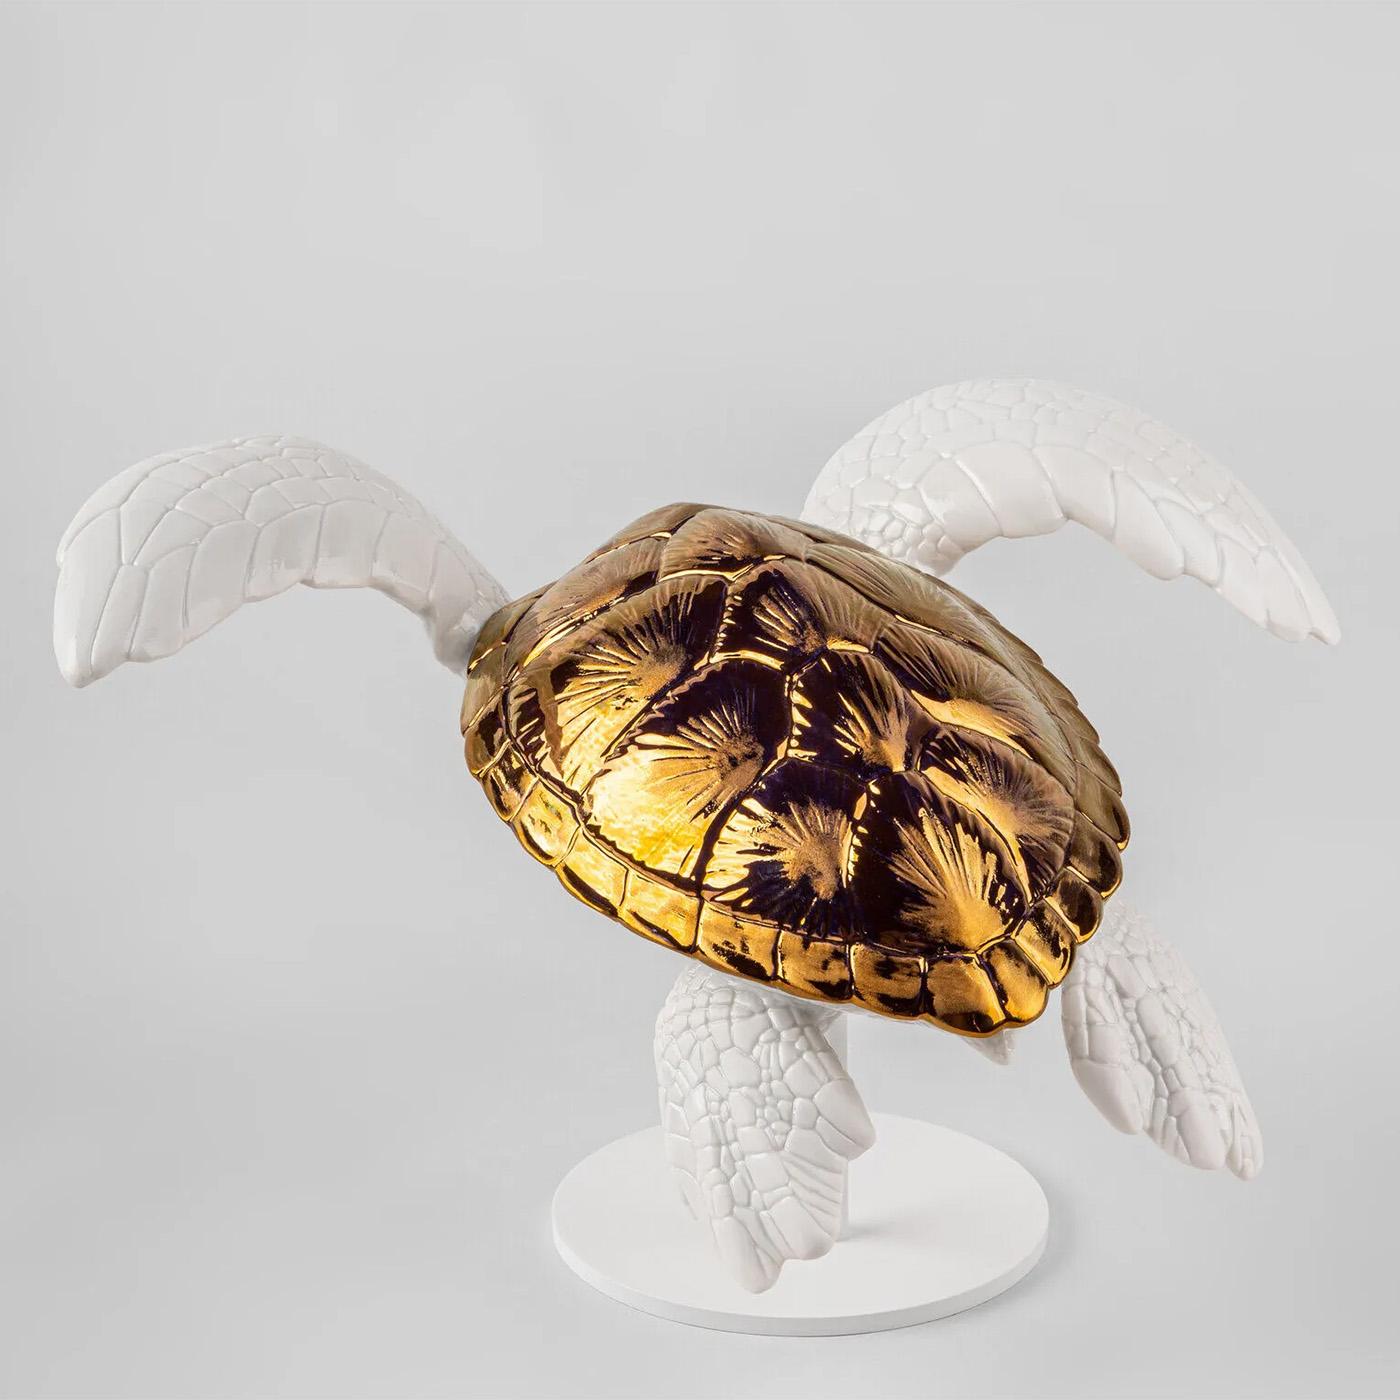 Glazed White Tortoise a Sculpture For Sale